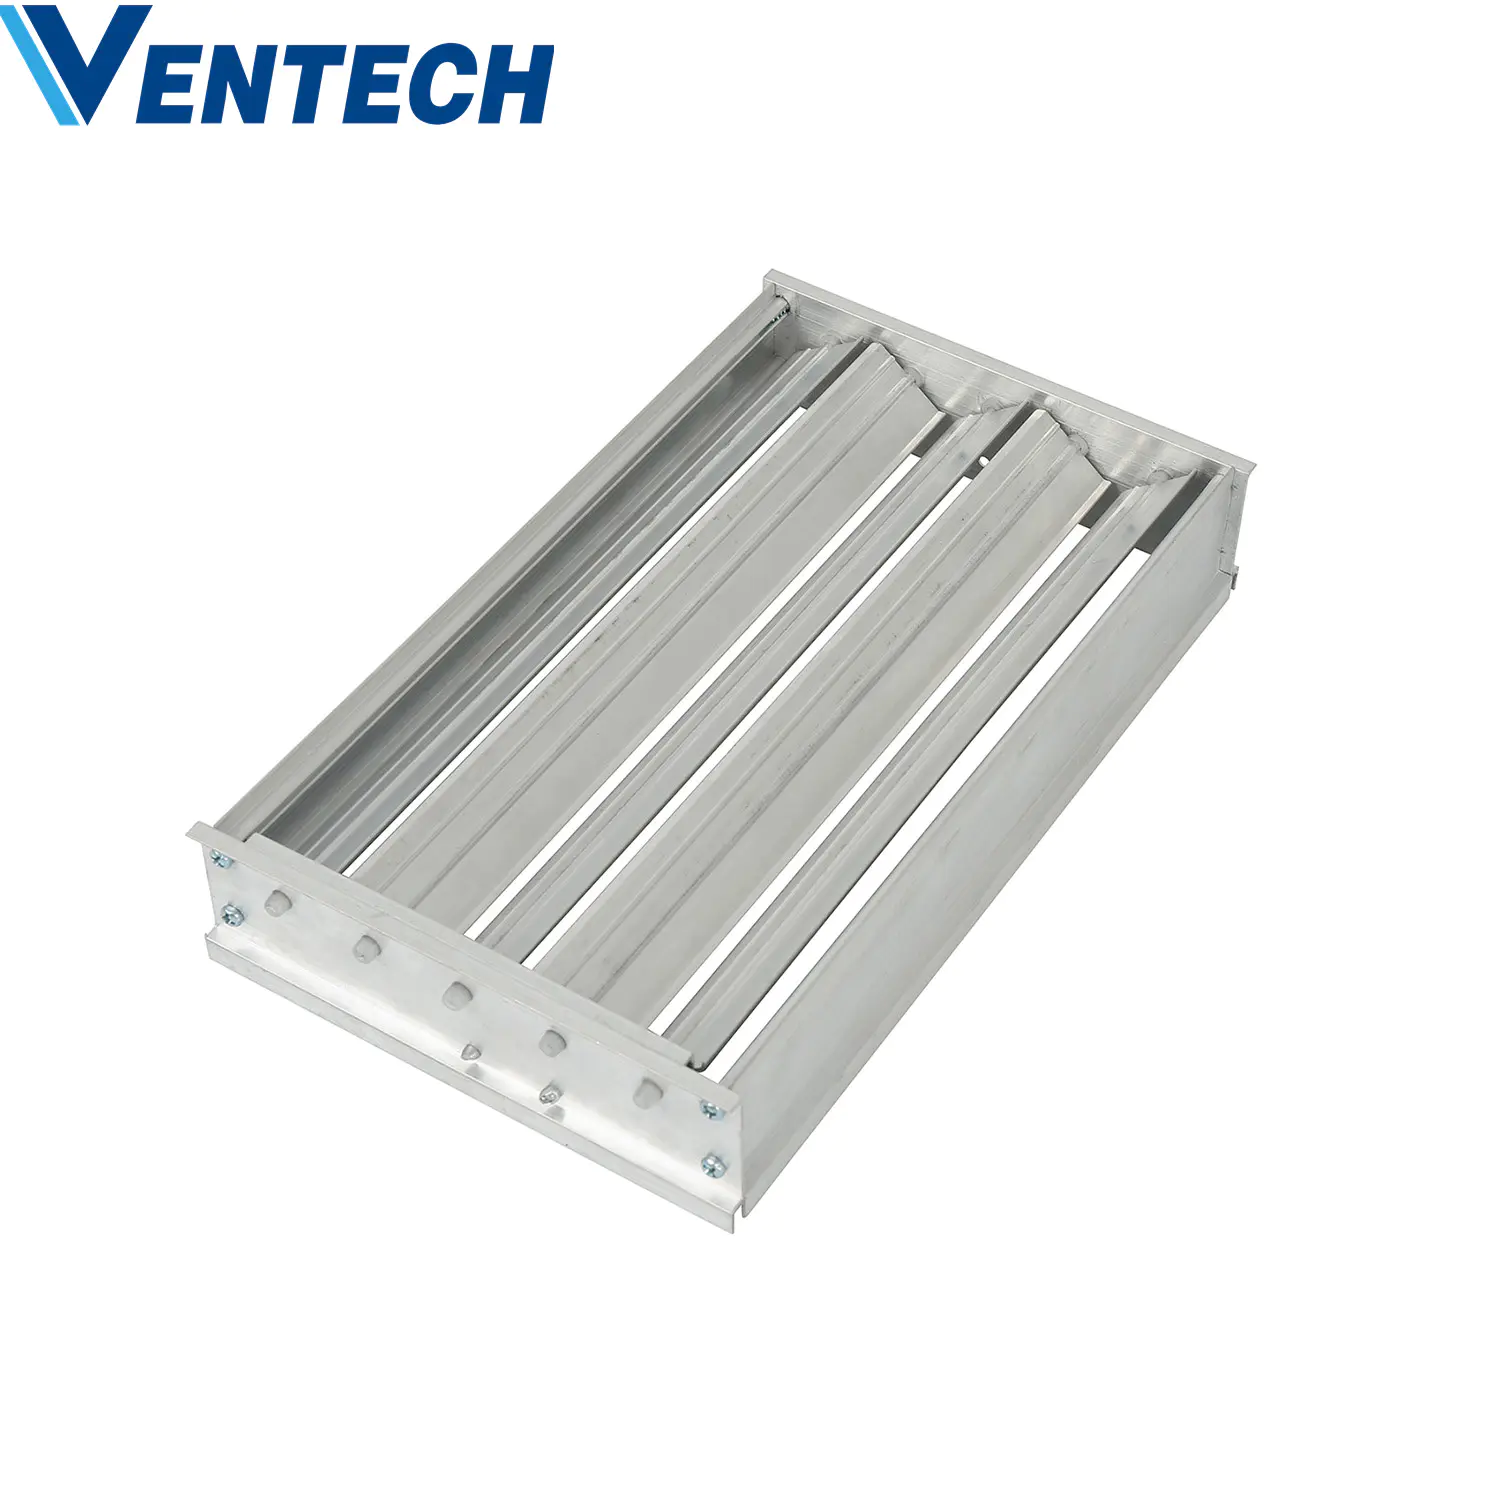 Hvac System Low Price Aluminum Square Air Control Ventilation Opposed Blades Volume Damper (OBD-VB)